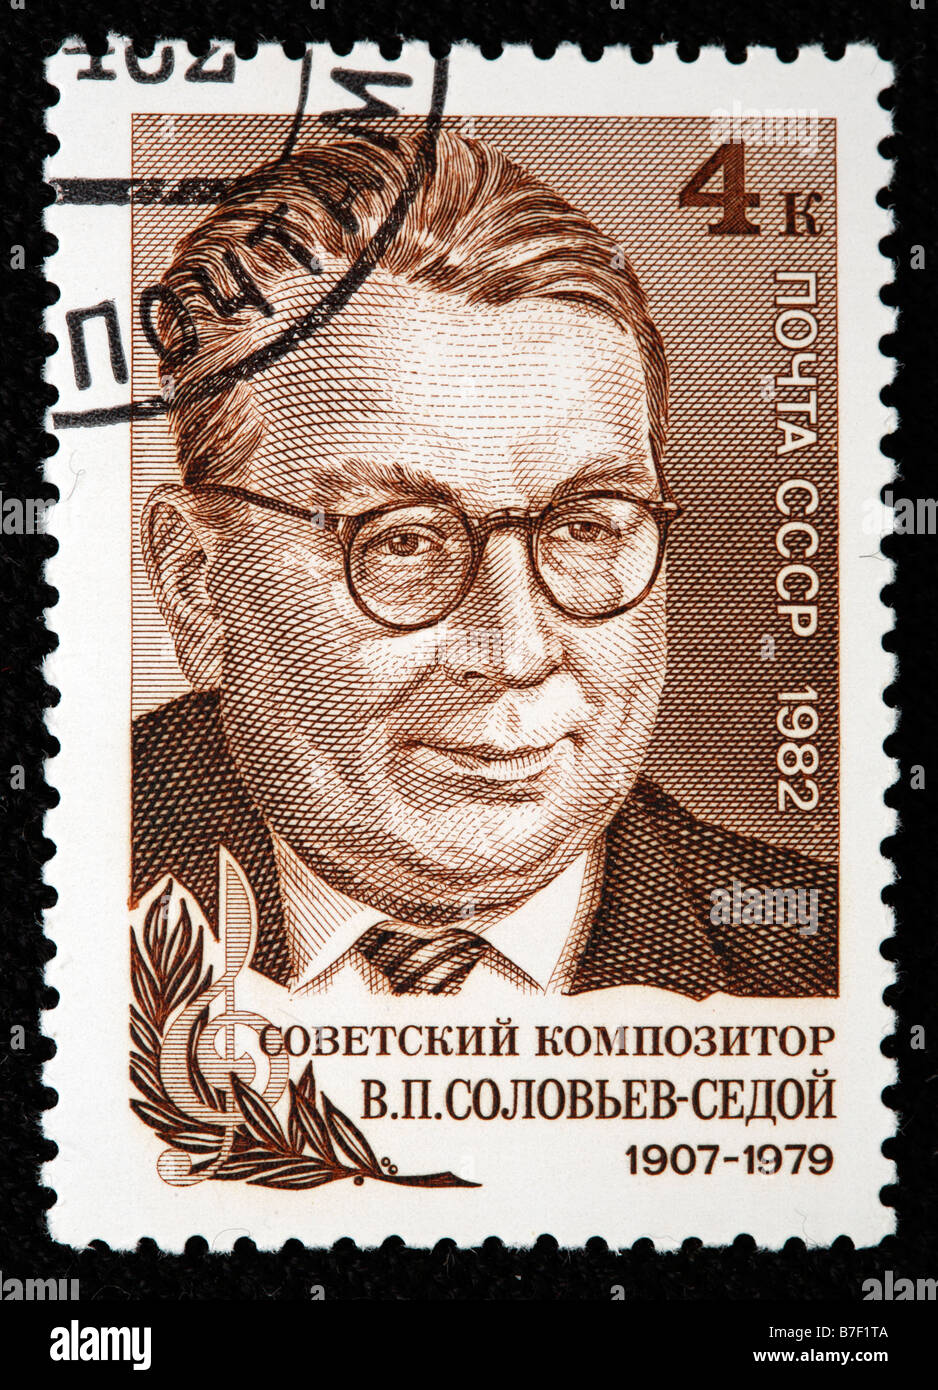 Sovietica compositore russo Soloviev-Sedoy (1907-1979), francobollo, URSS, 1982 Foto Stock